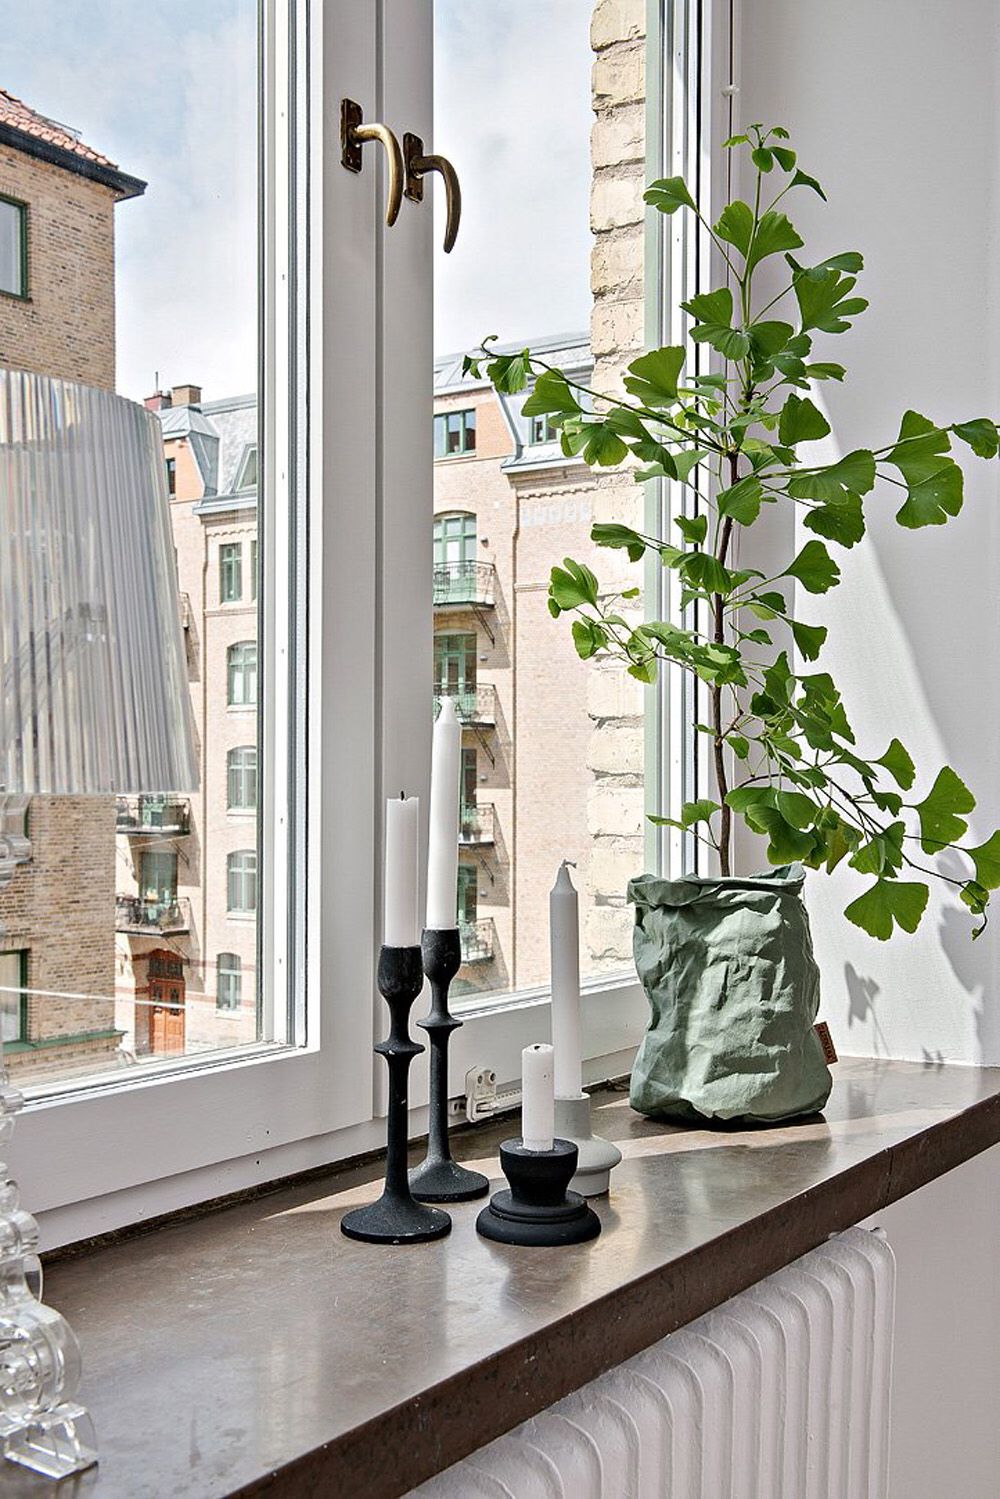 xrebord fenêtre marron bougie plante verte fenêtre radiateur bougie